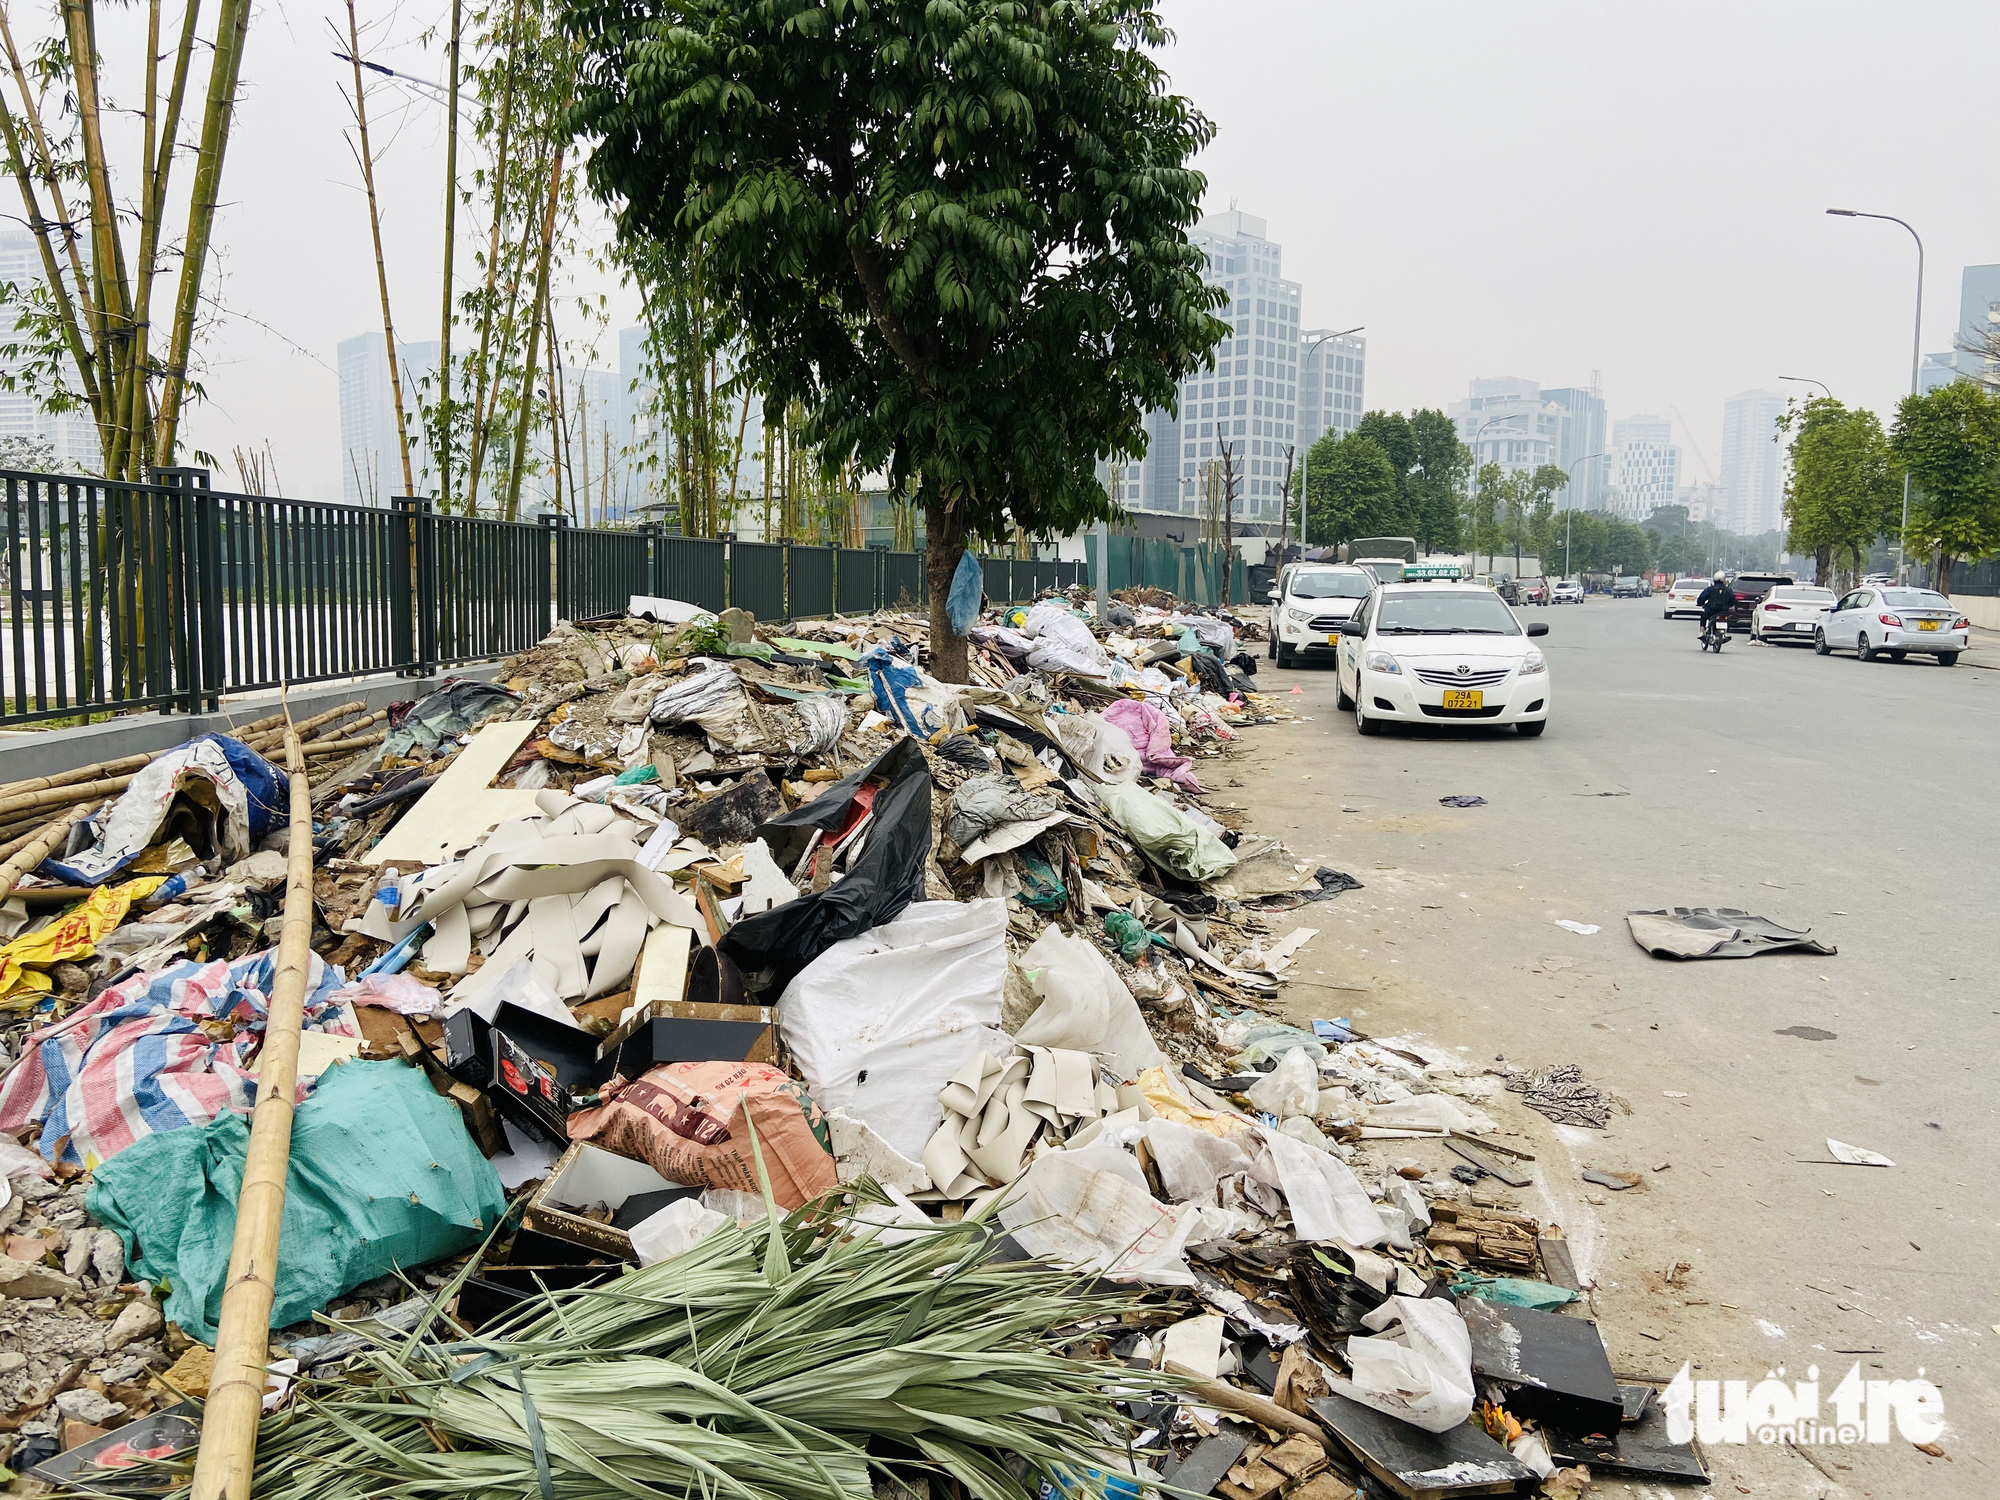 Illegal dumping persists in Hanoi